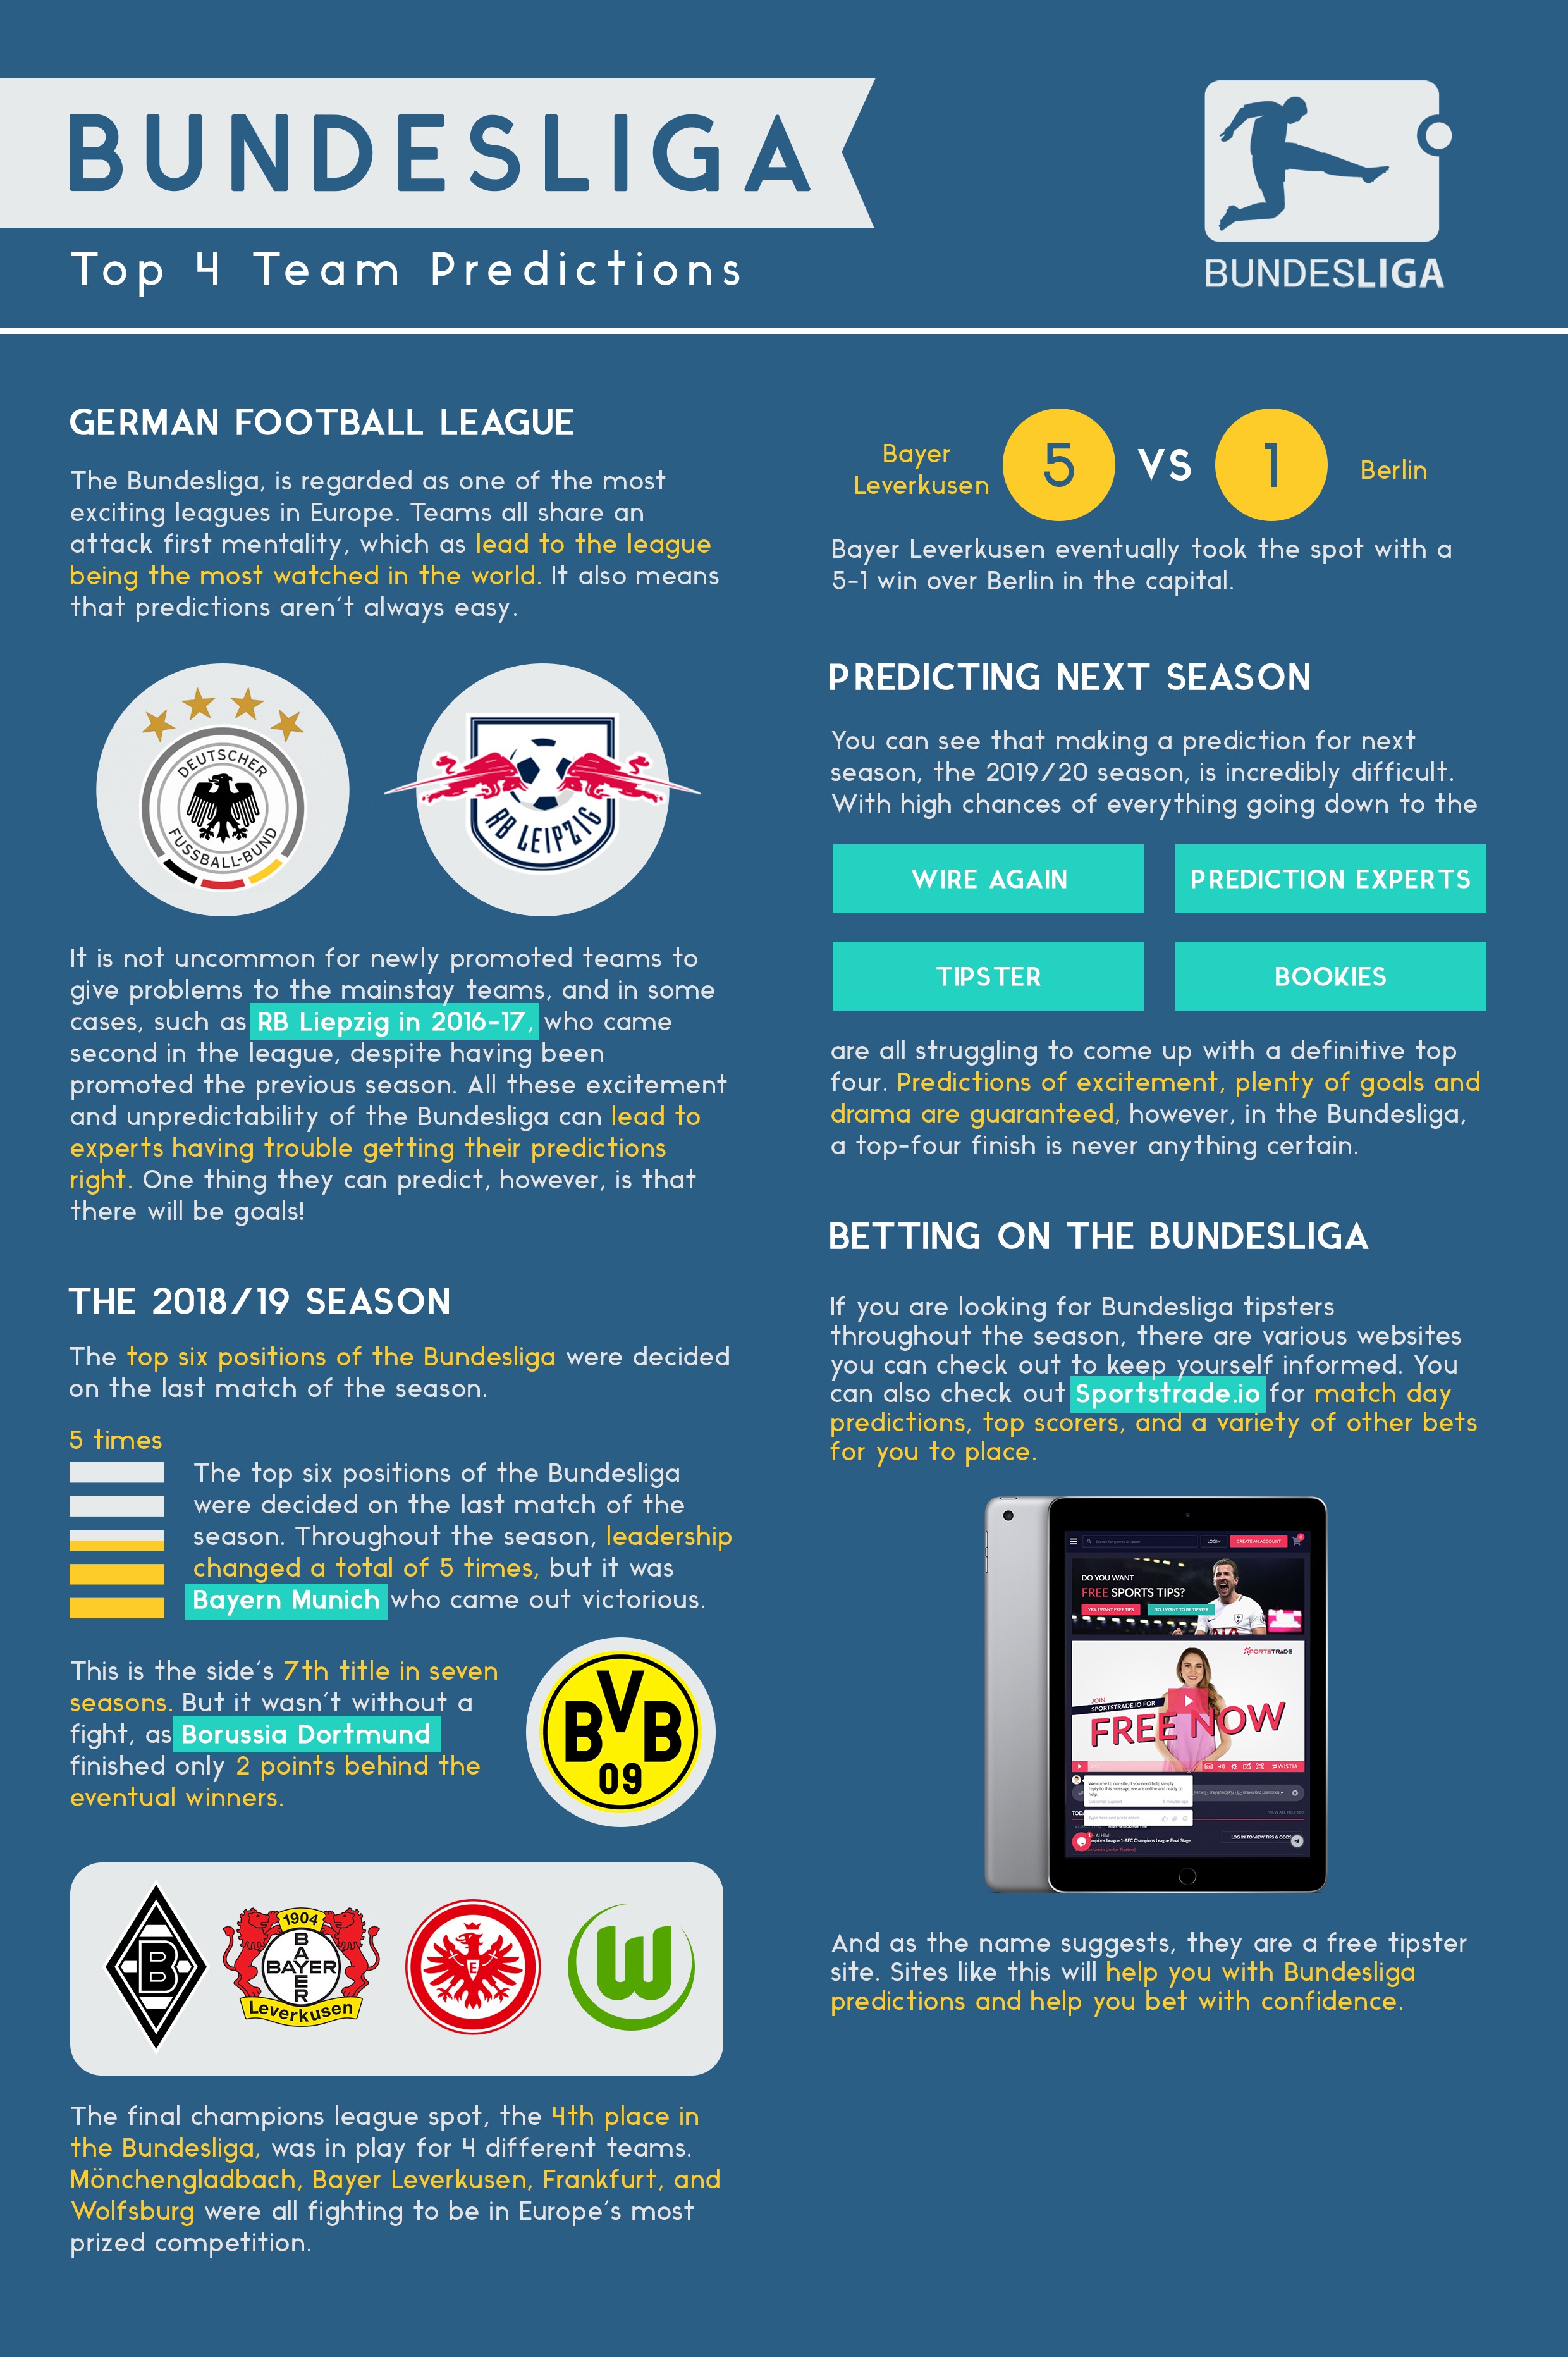 Bundesliga Top 4 Team Predictions Infographic